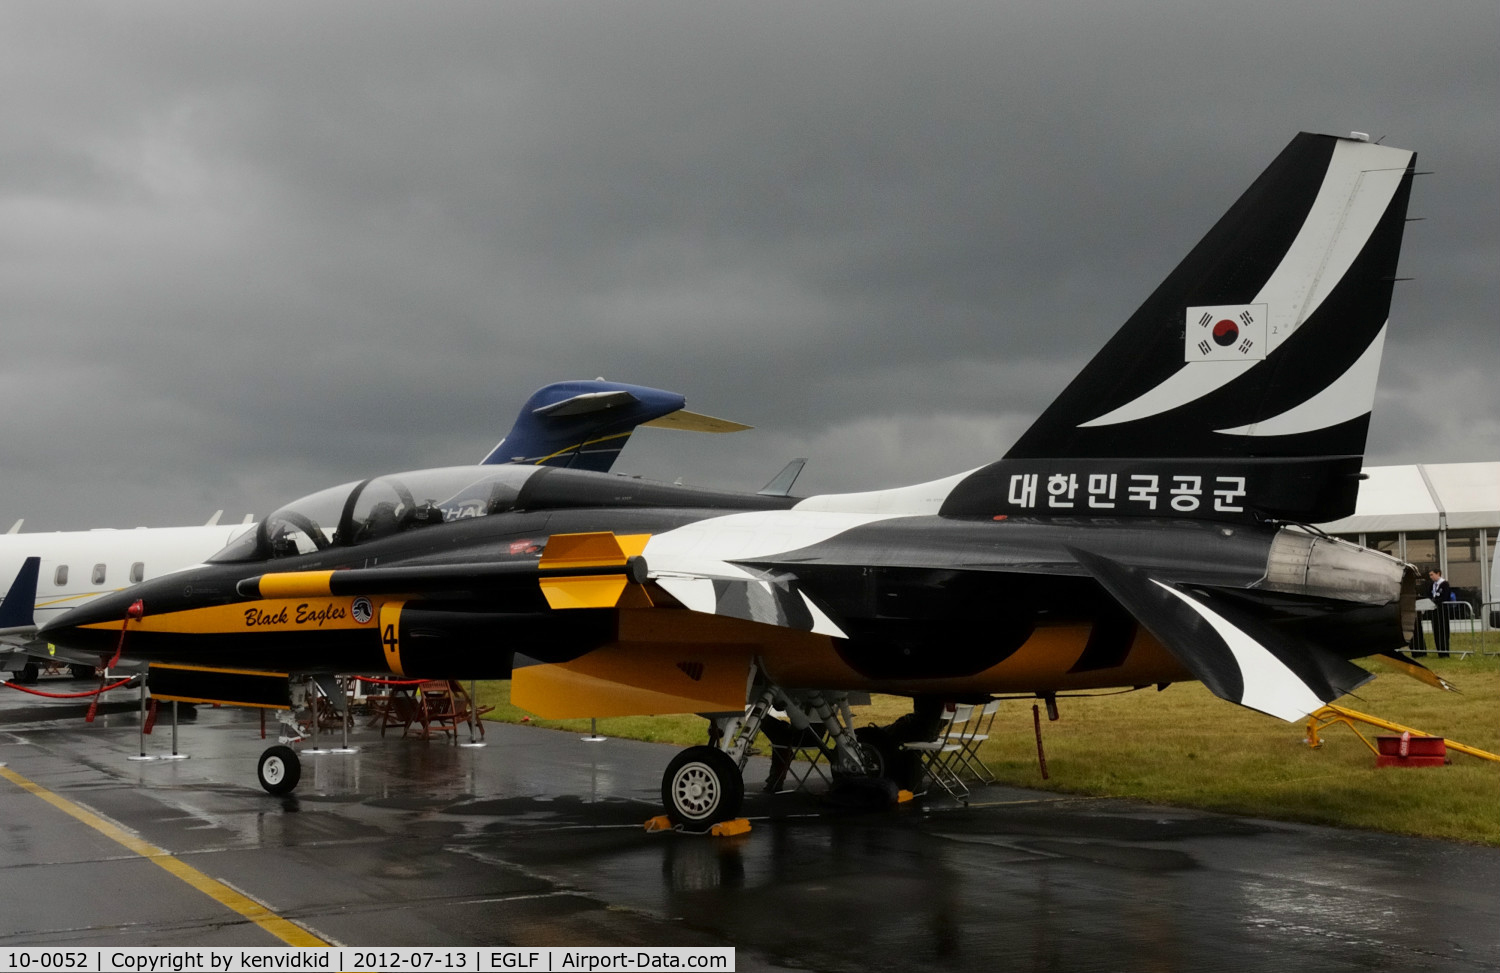 10-0052, 2010 Korean Aerospace Industries T-50B Golden Eagle C/N KA-052, On static display at FIA 2012.